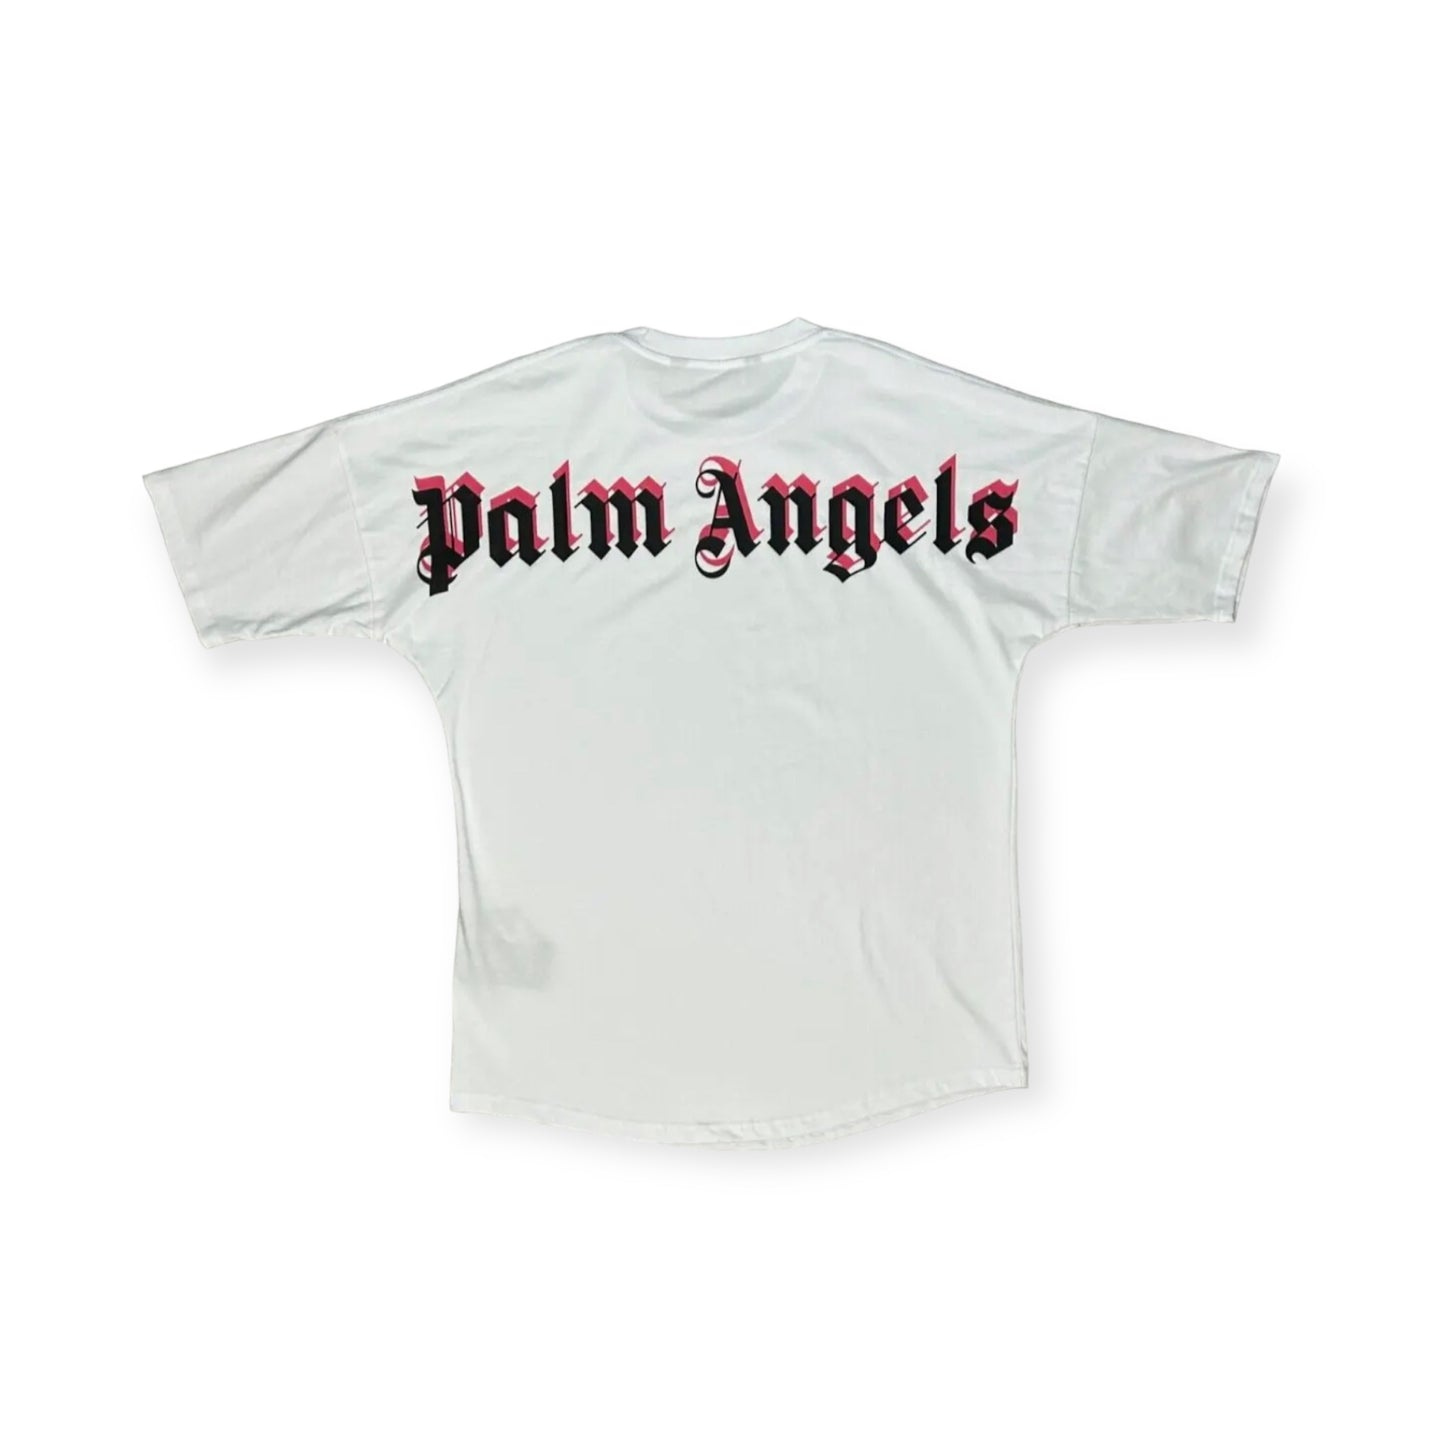 Brand New Palm Angels Logo Tee Size M